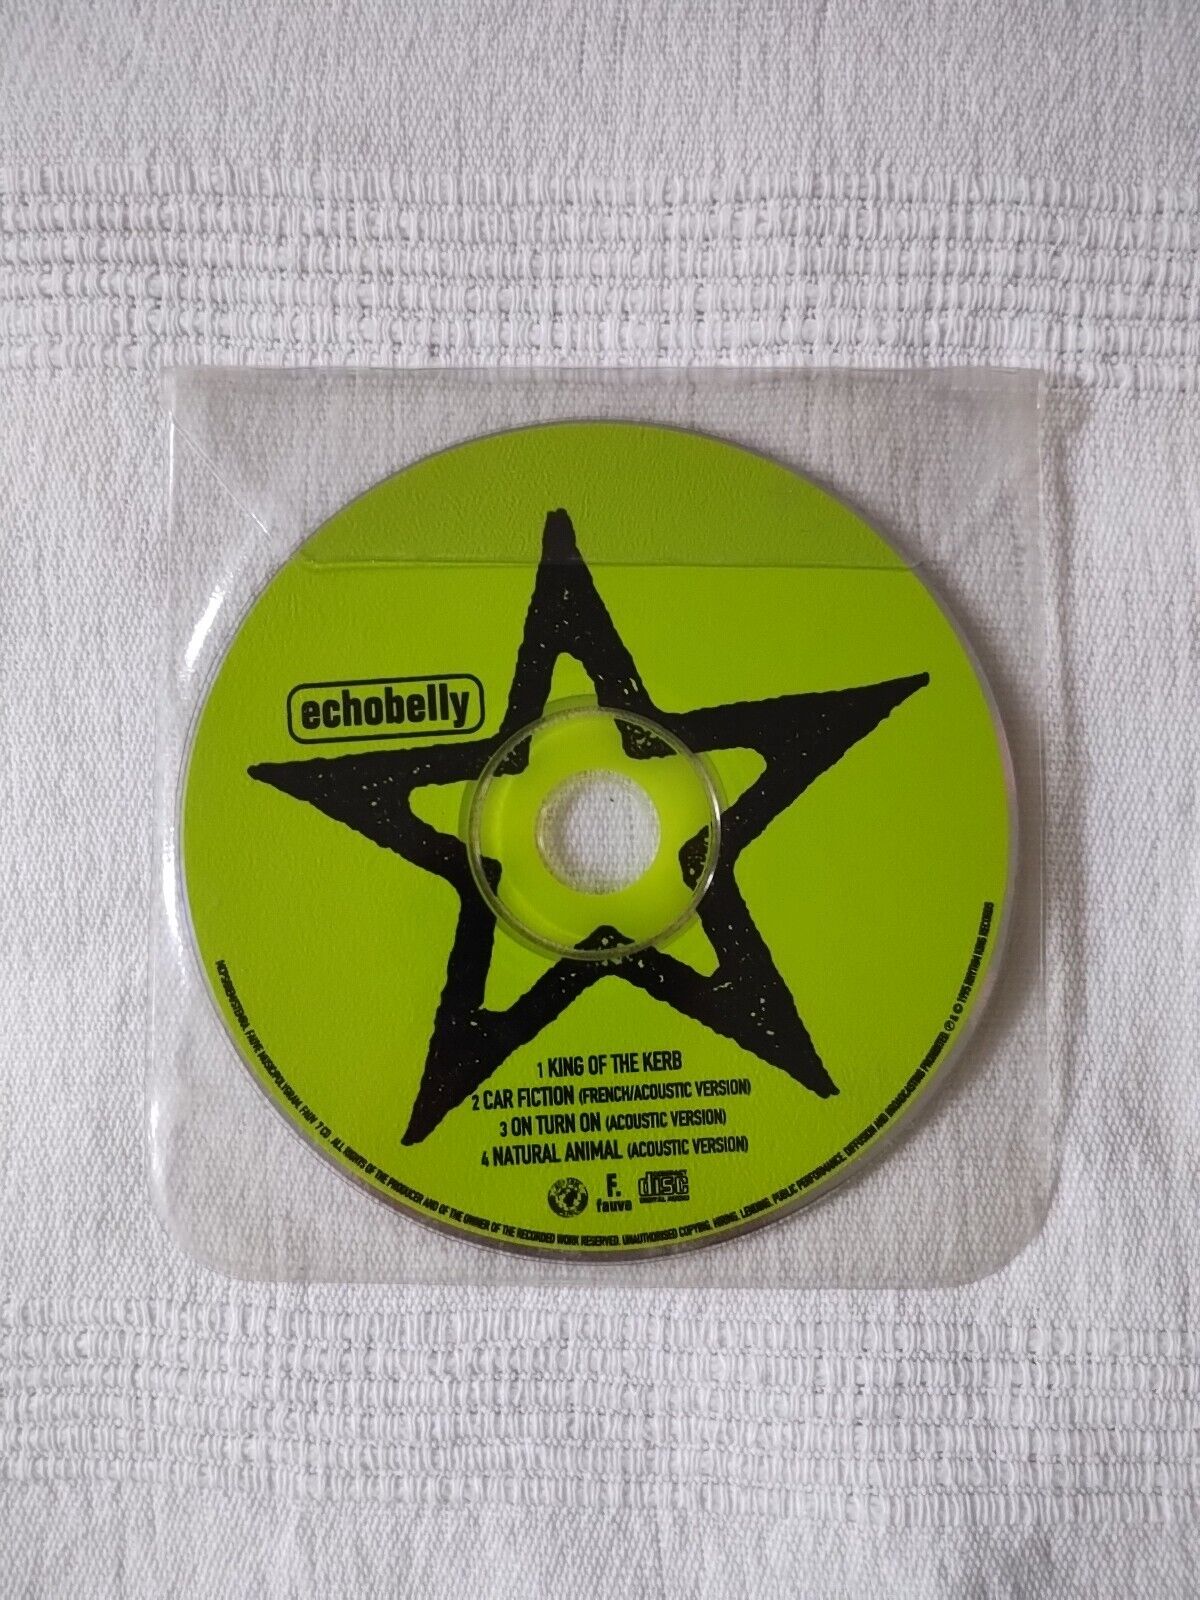 Echobelly - King Of The Kerb. 4 Track CD Single. FAUV 7 CD, CD 01. (1995).